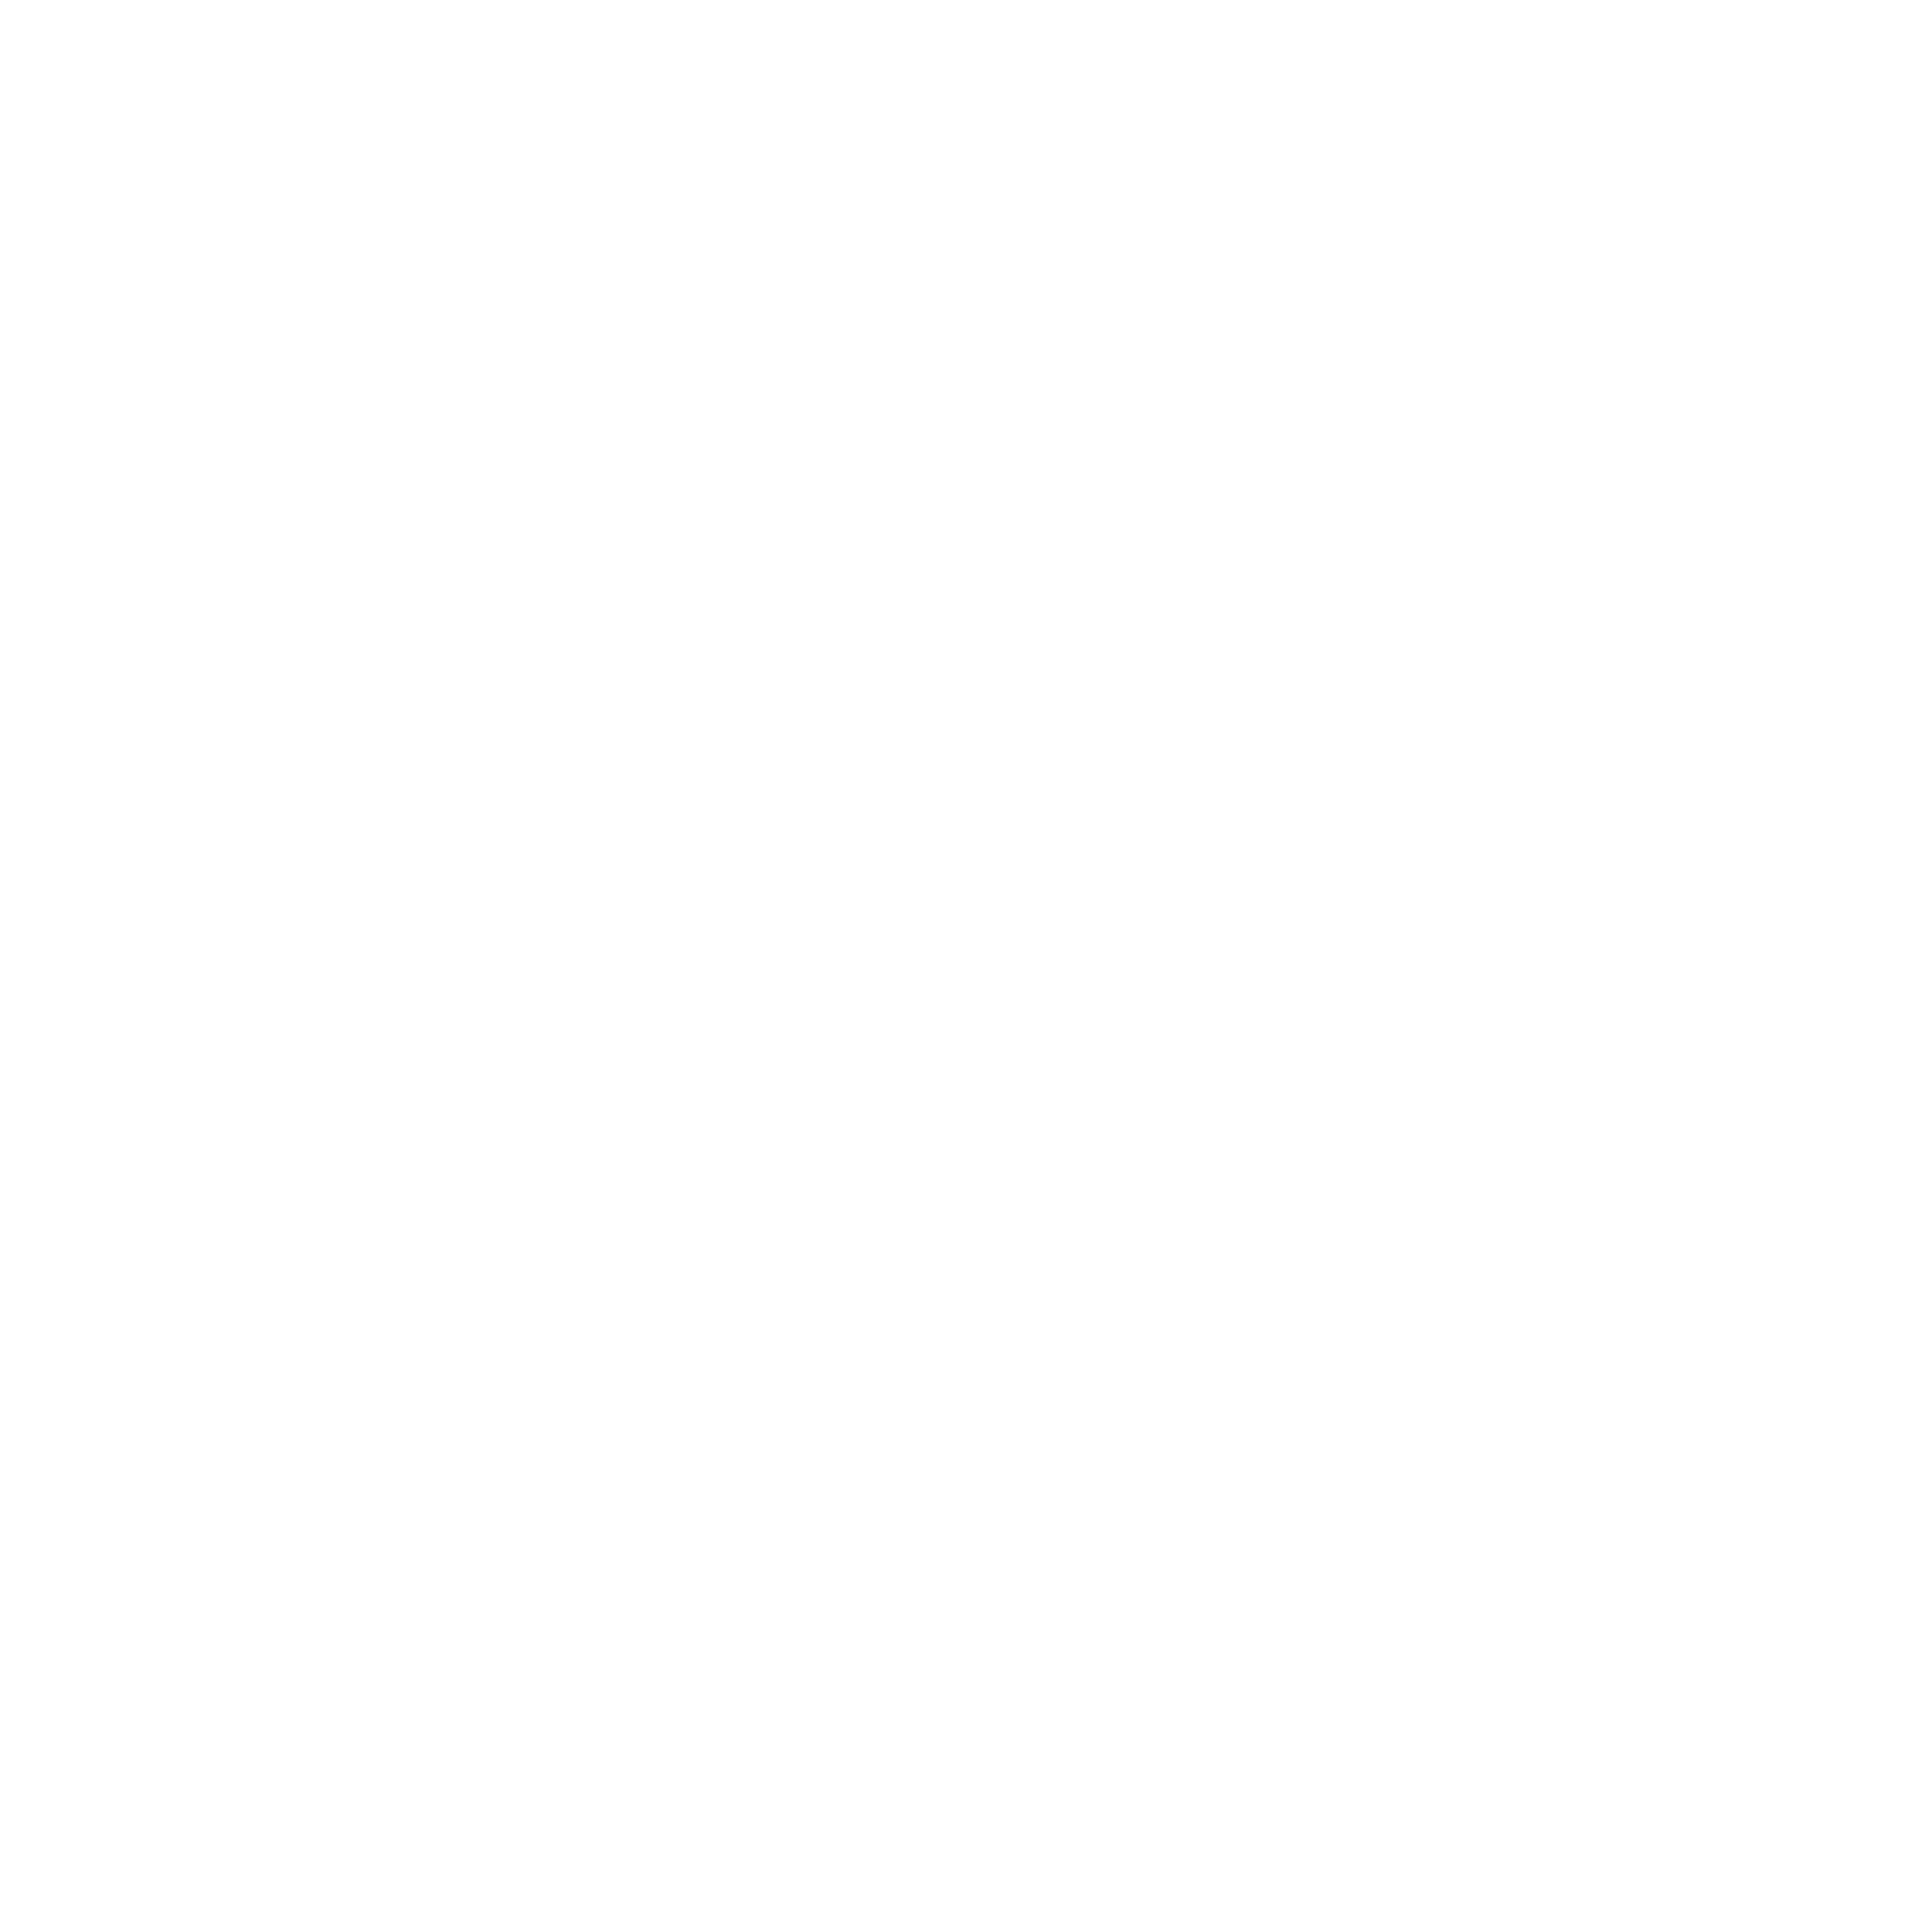 Oxygen Corps